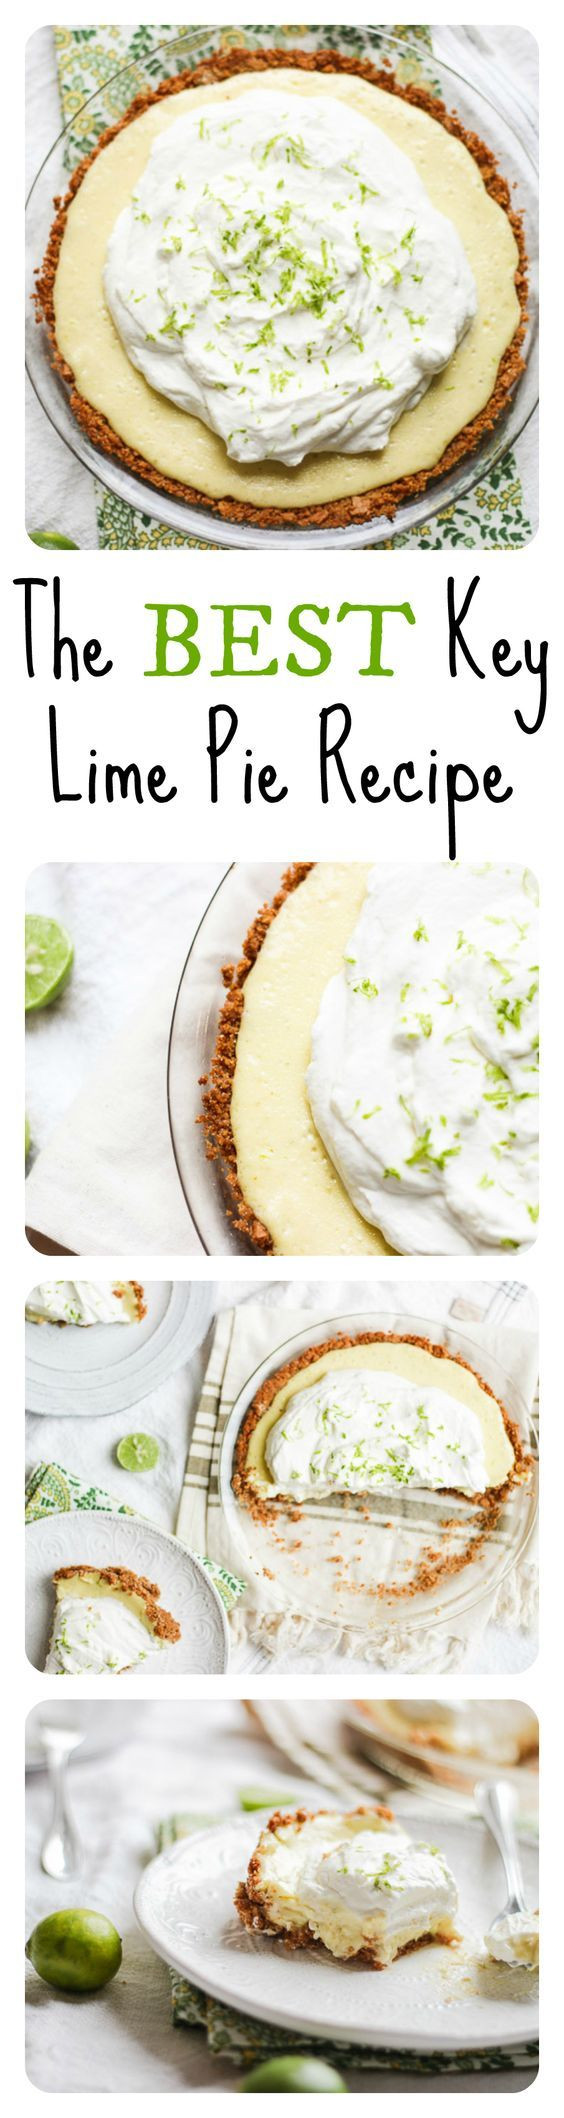 Best Key Lime Pie Recipe
 Best key lime pie Lime pie recipe and Pie recipes on